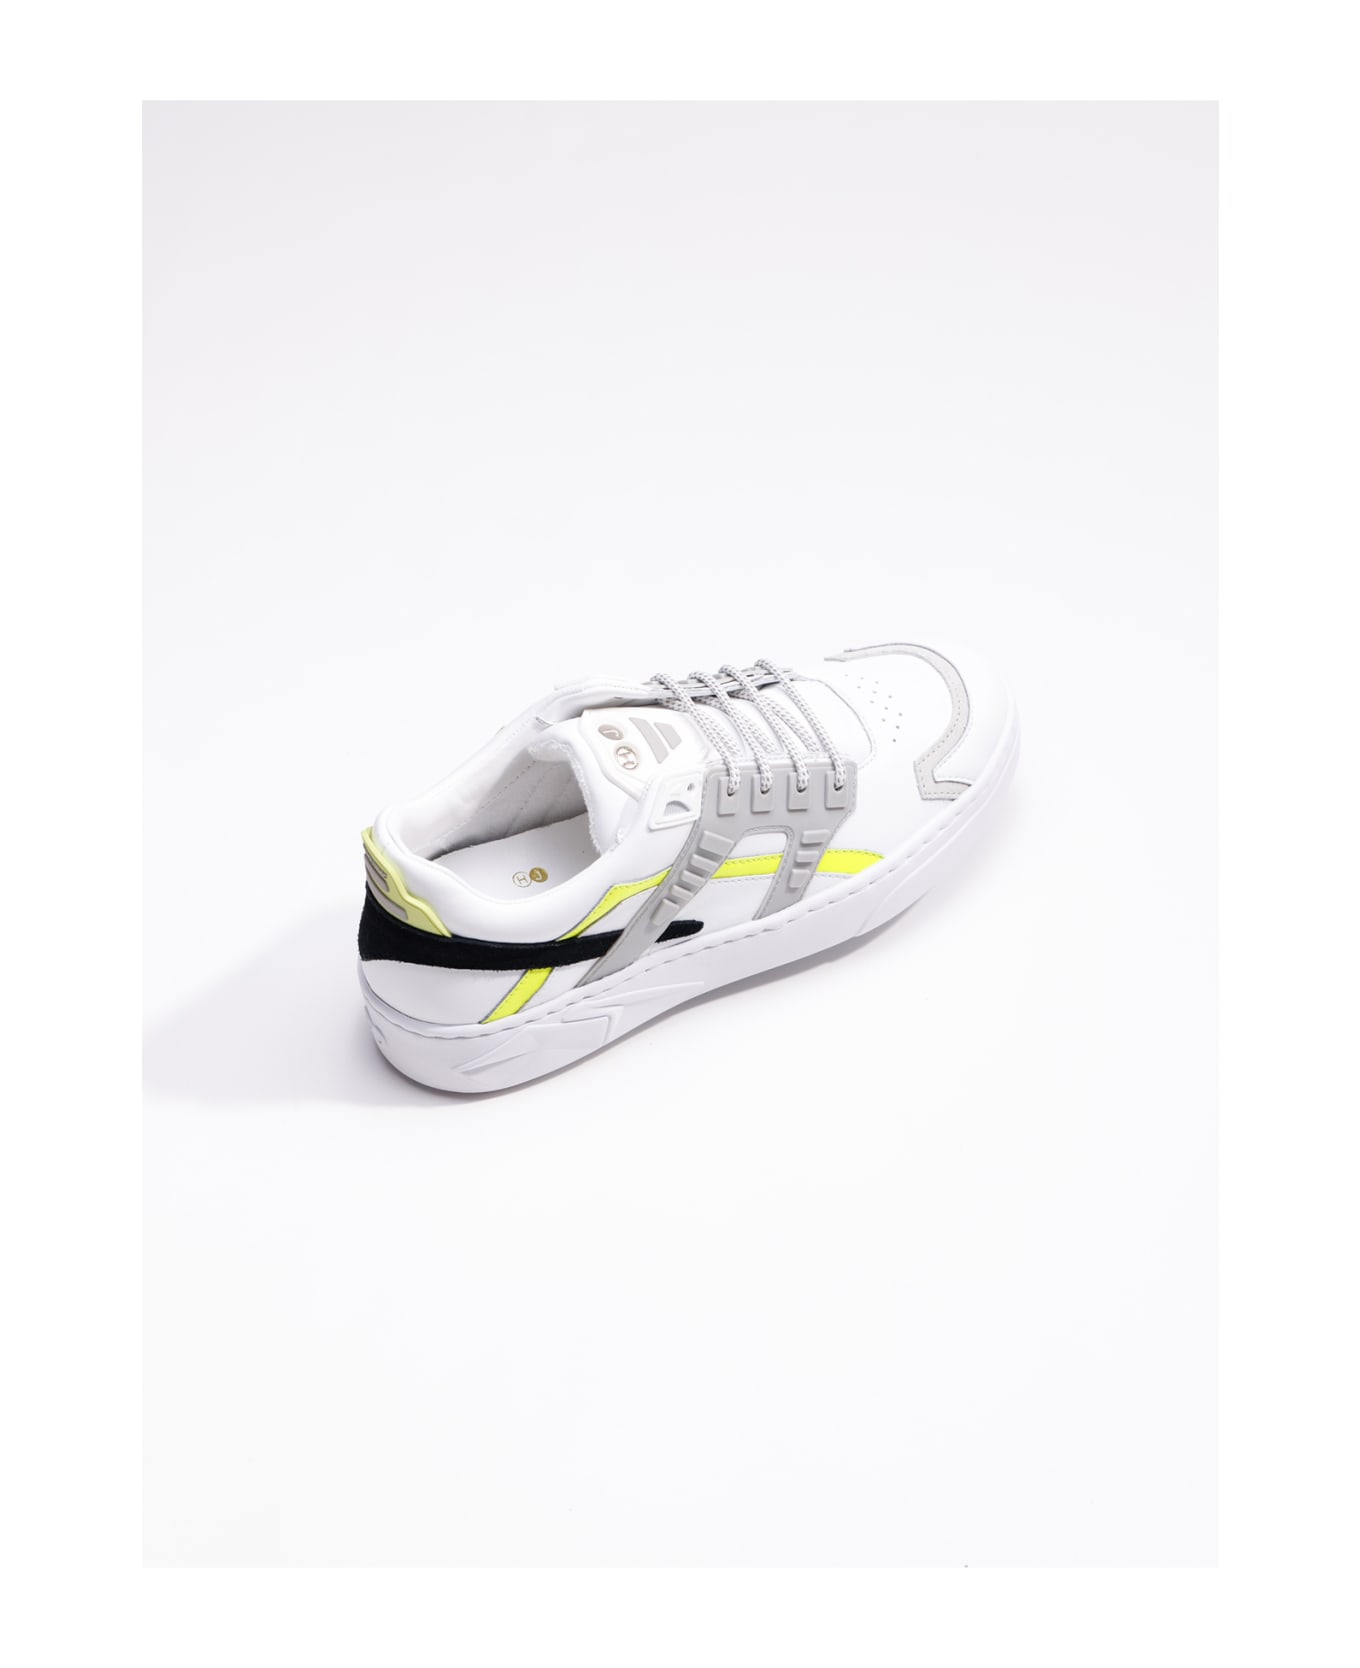 Hide&Jack Low Top Sneaker - Mini Silverstone Yellow White